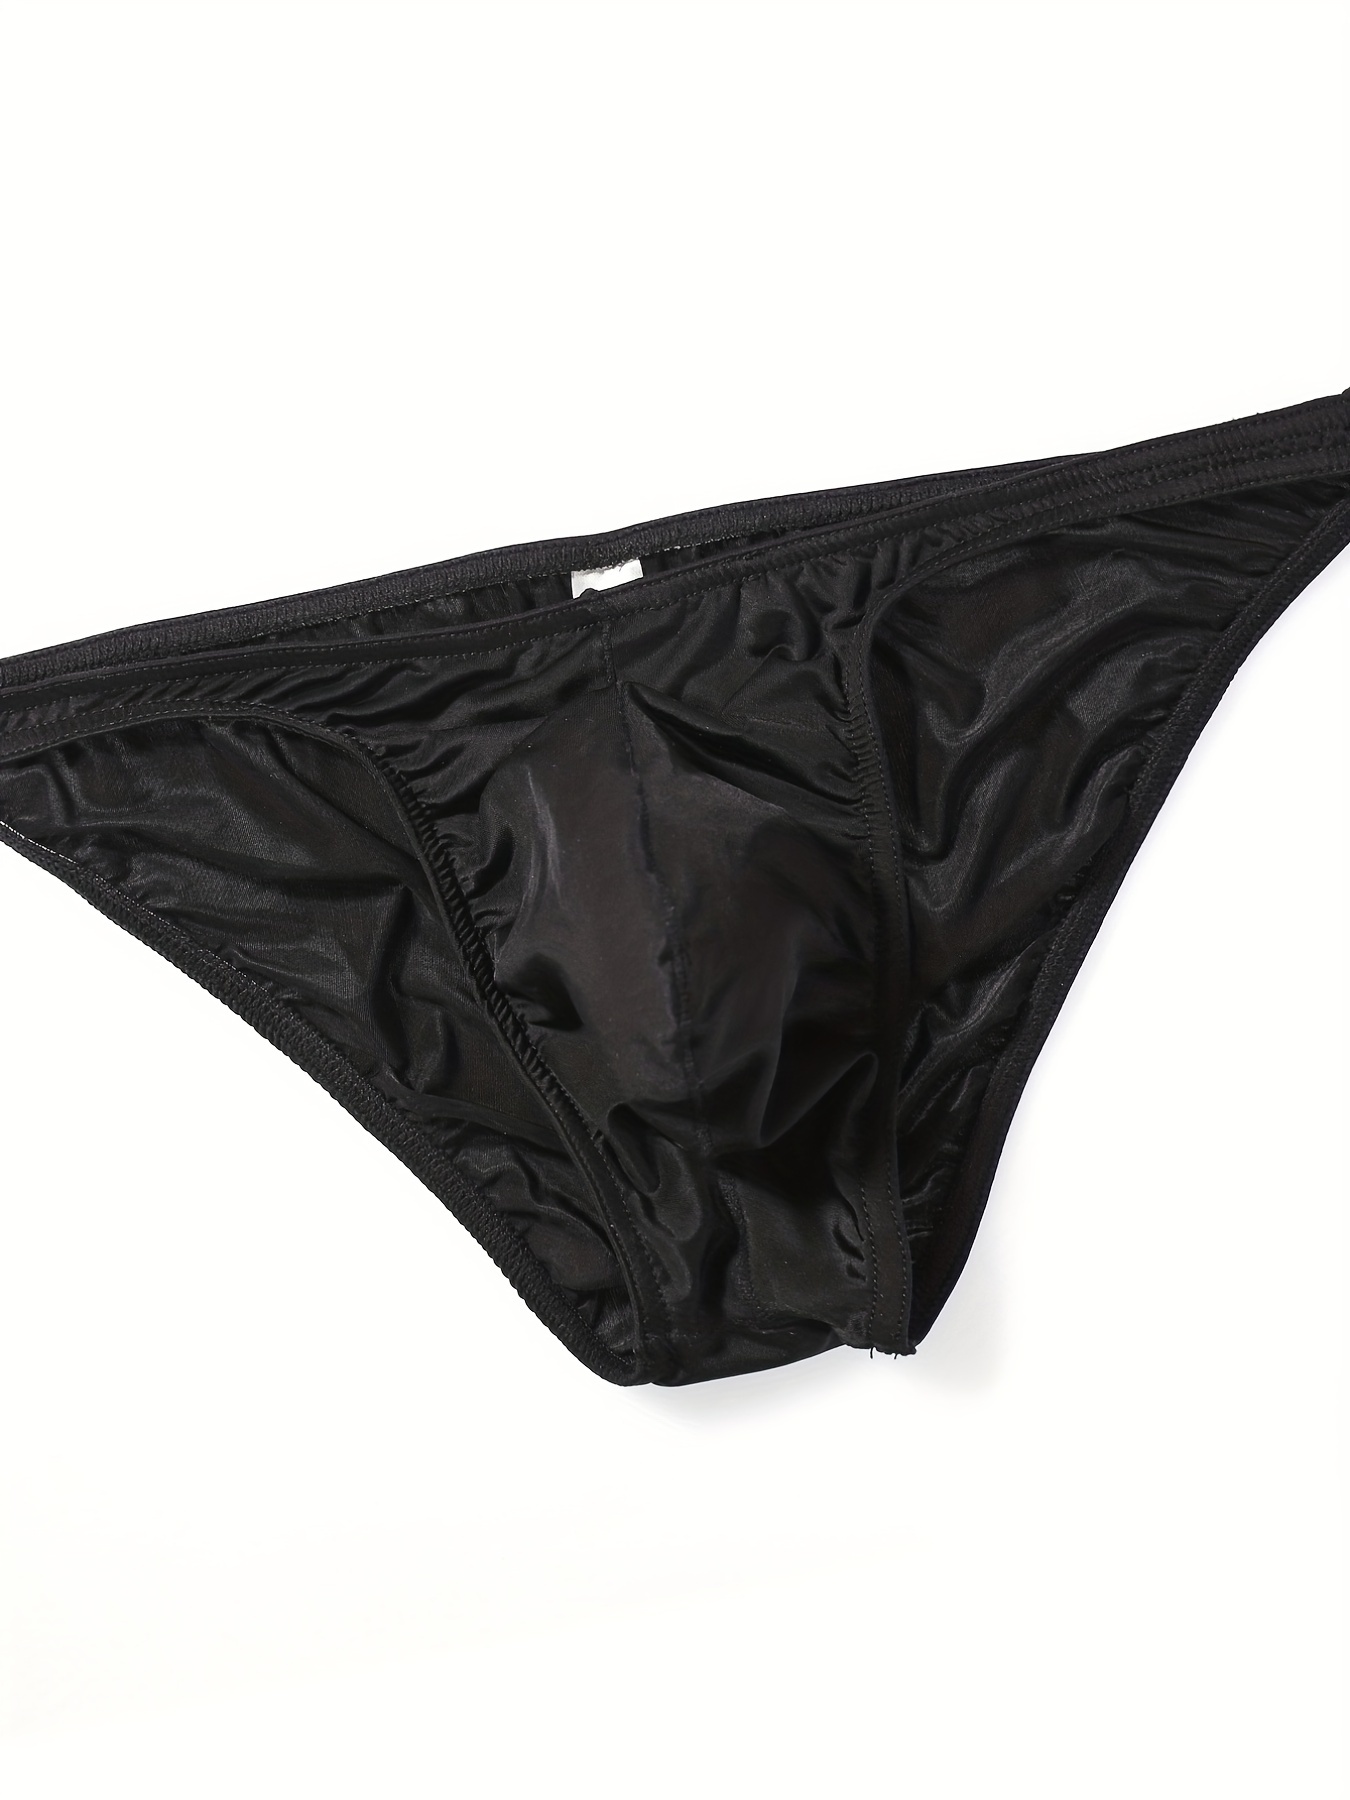 Feelvery Men's Natural Ultra-Soft Premium Tencel Silk Long Johns Thermal  Underwear Set (Black, X-Large) price in UAE,  UAE